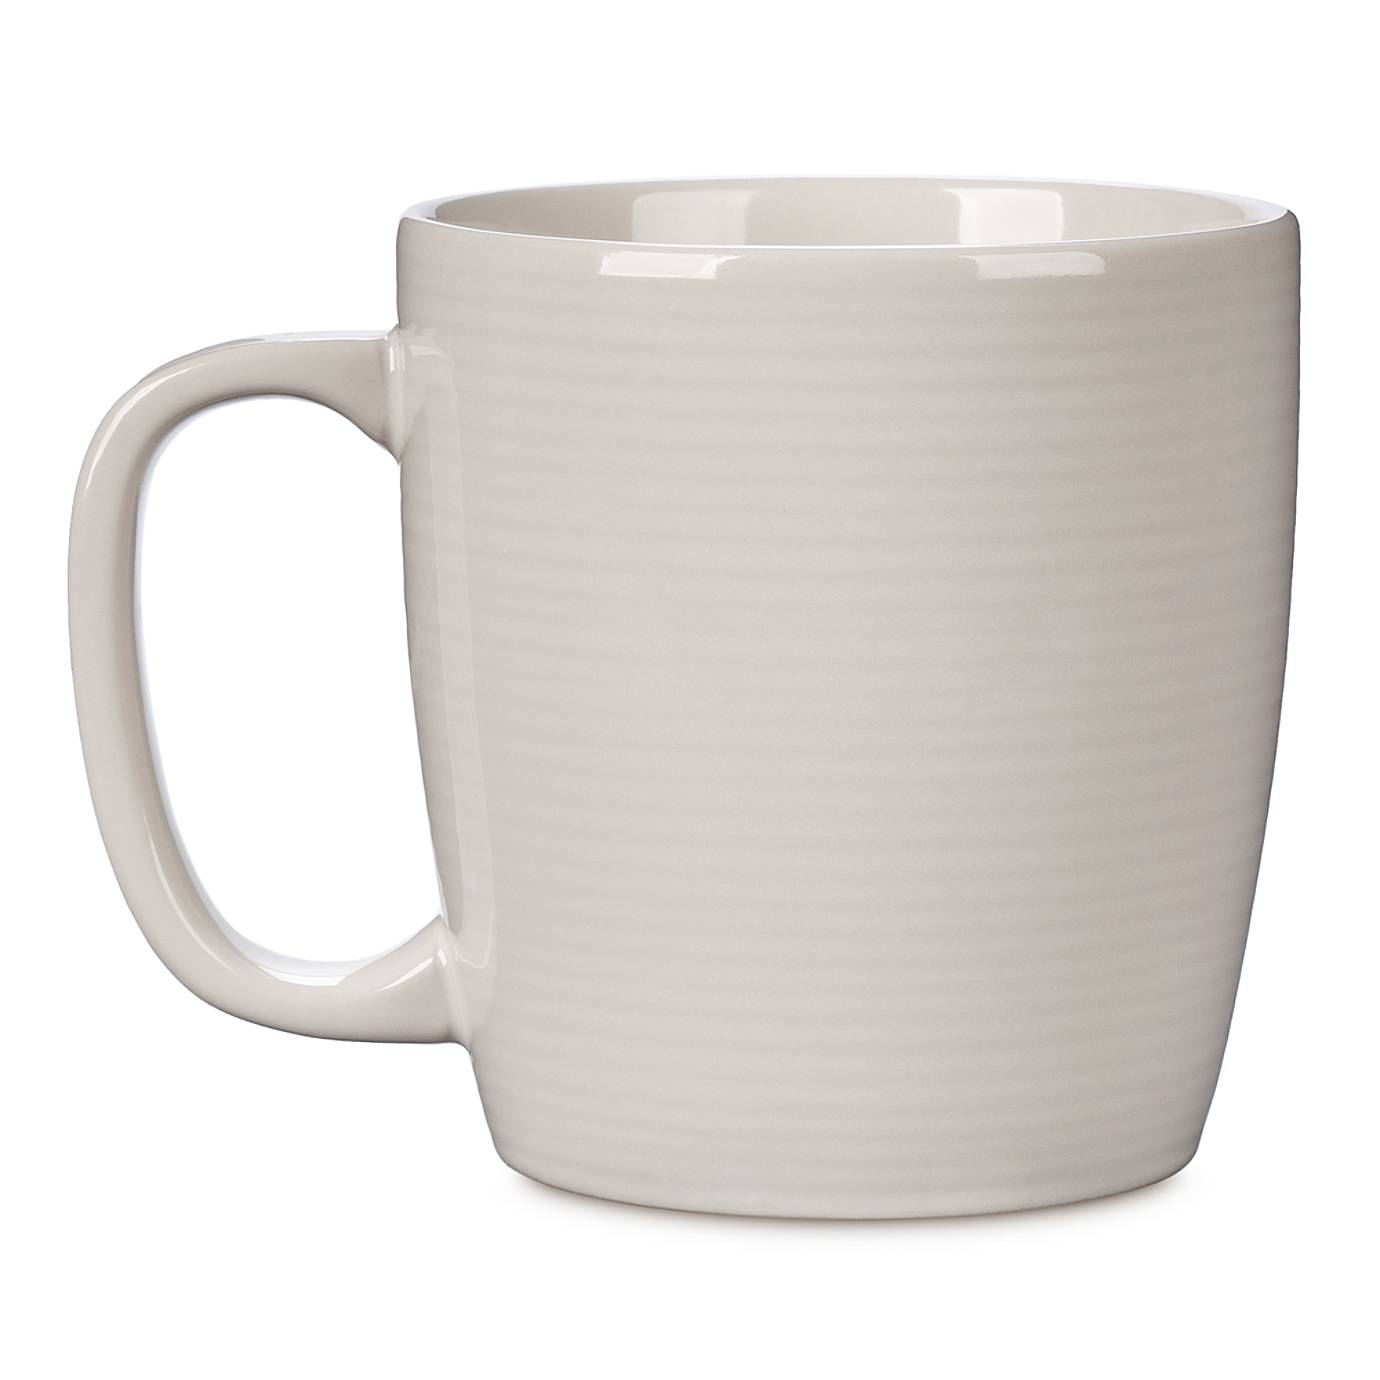 Disney Parks ABC Letters A is for Adventureland Ceramic Coffee Mug New